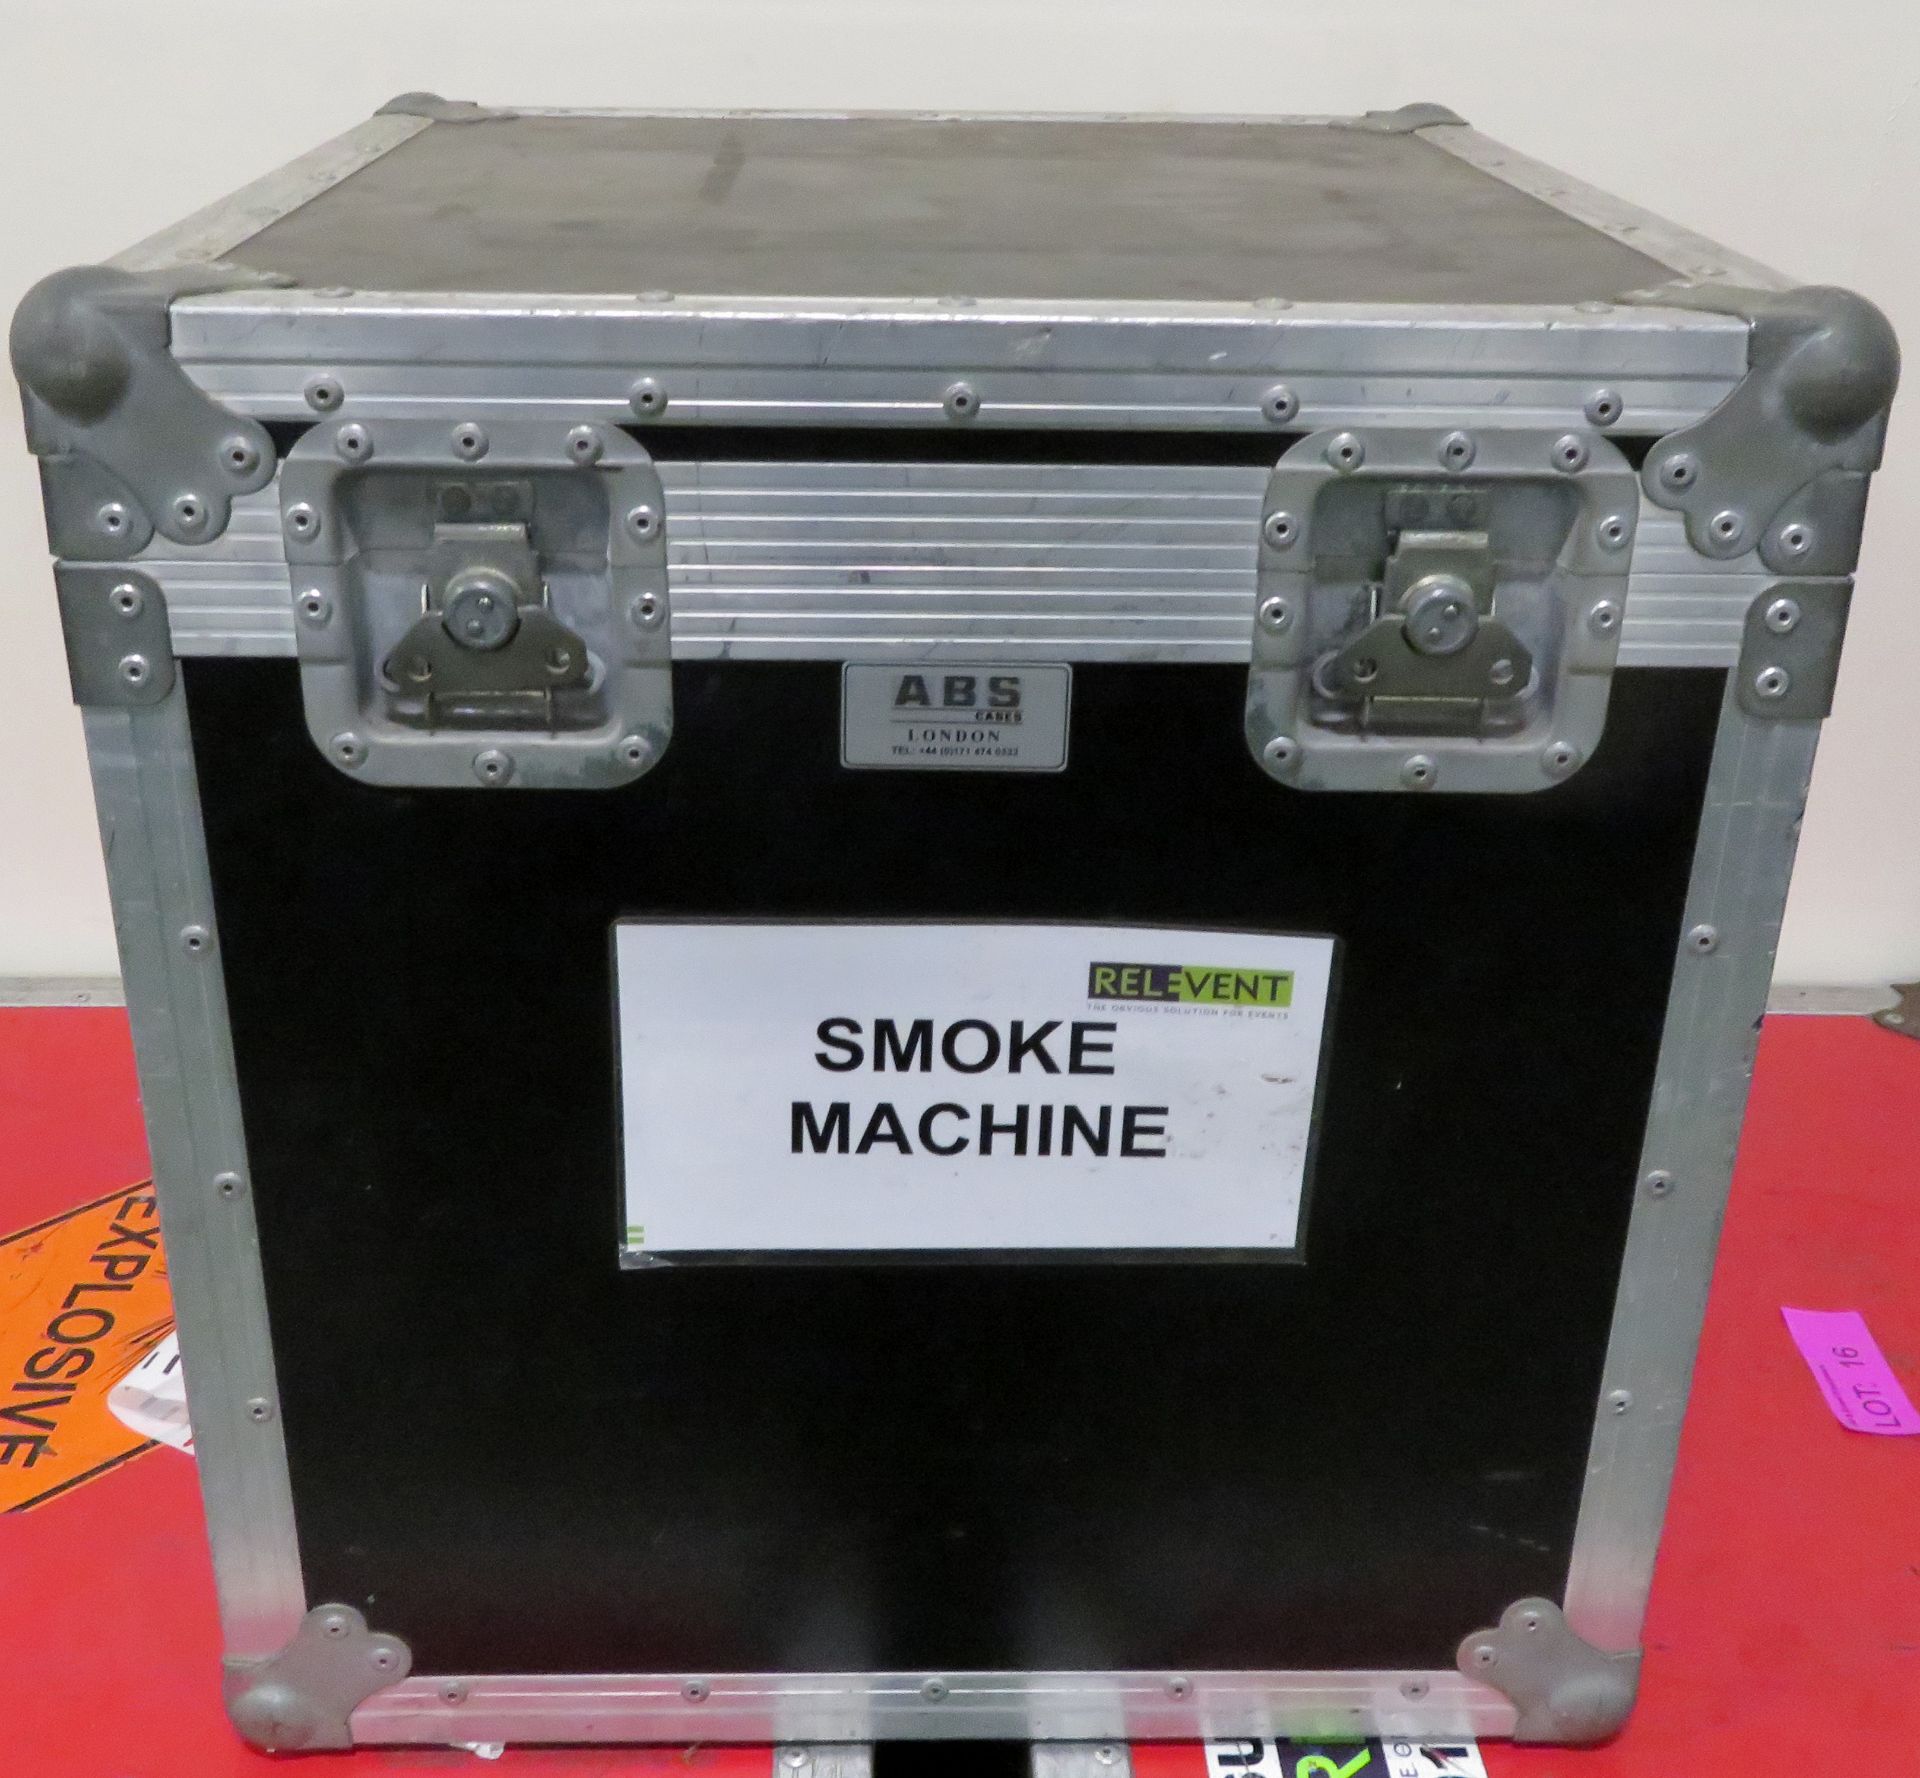 Antari Z1200 Smoke Machine and Remote in Flight Case Case Dimensions L500xH430xW500mm. - Image 8 of 8